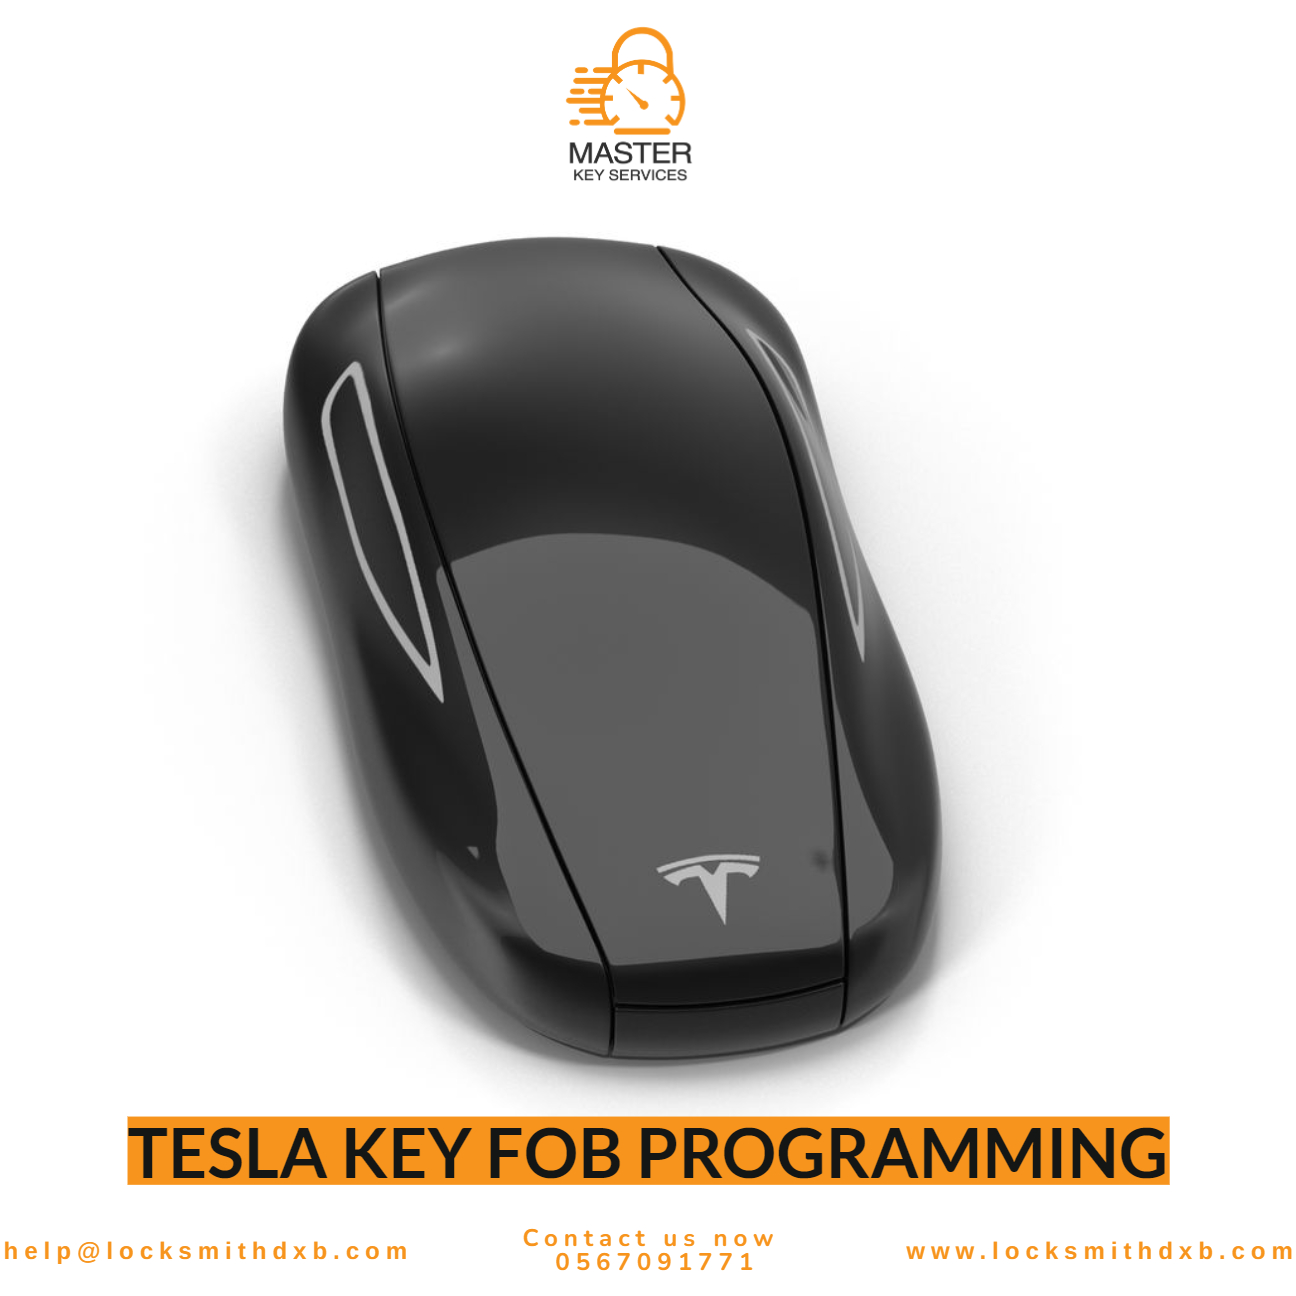 Tesla key fob programming